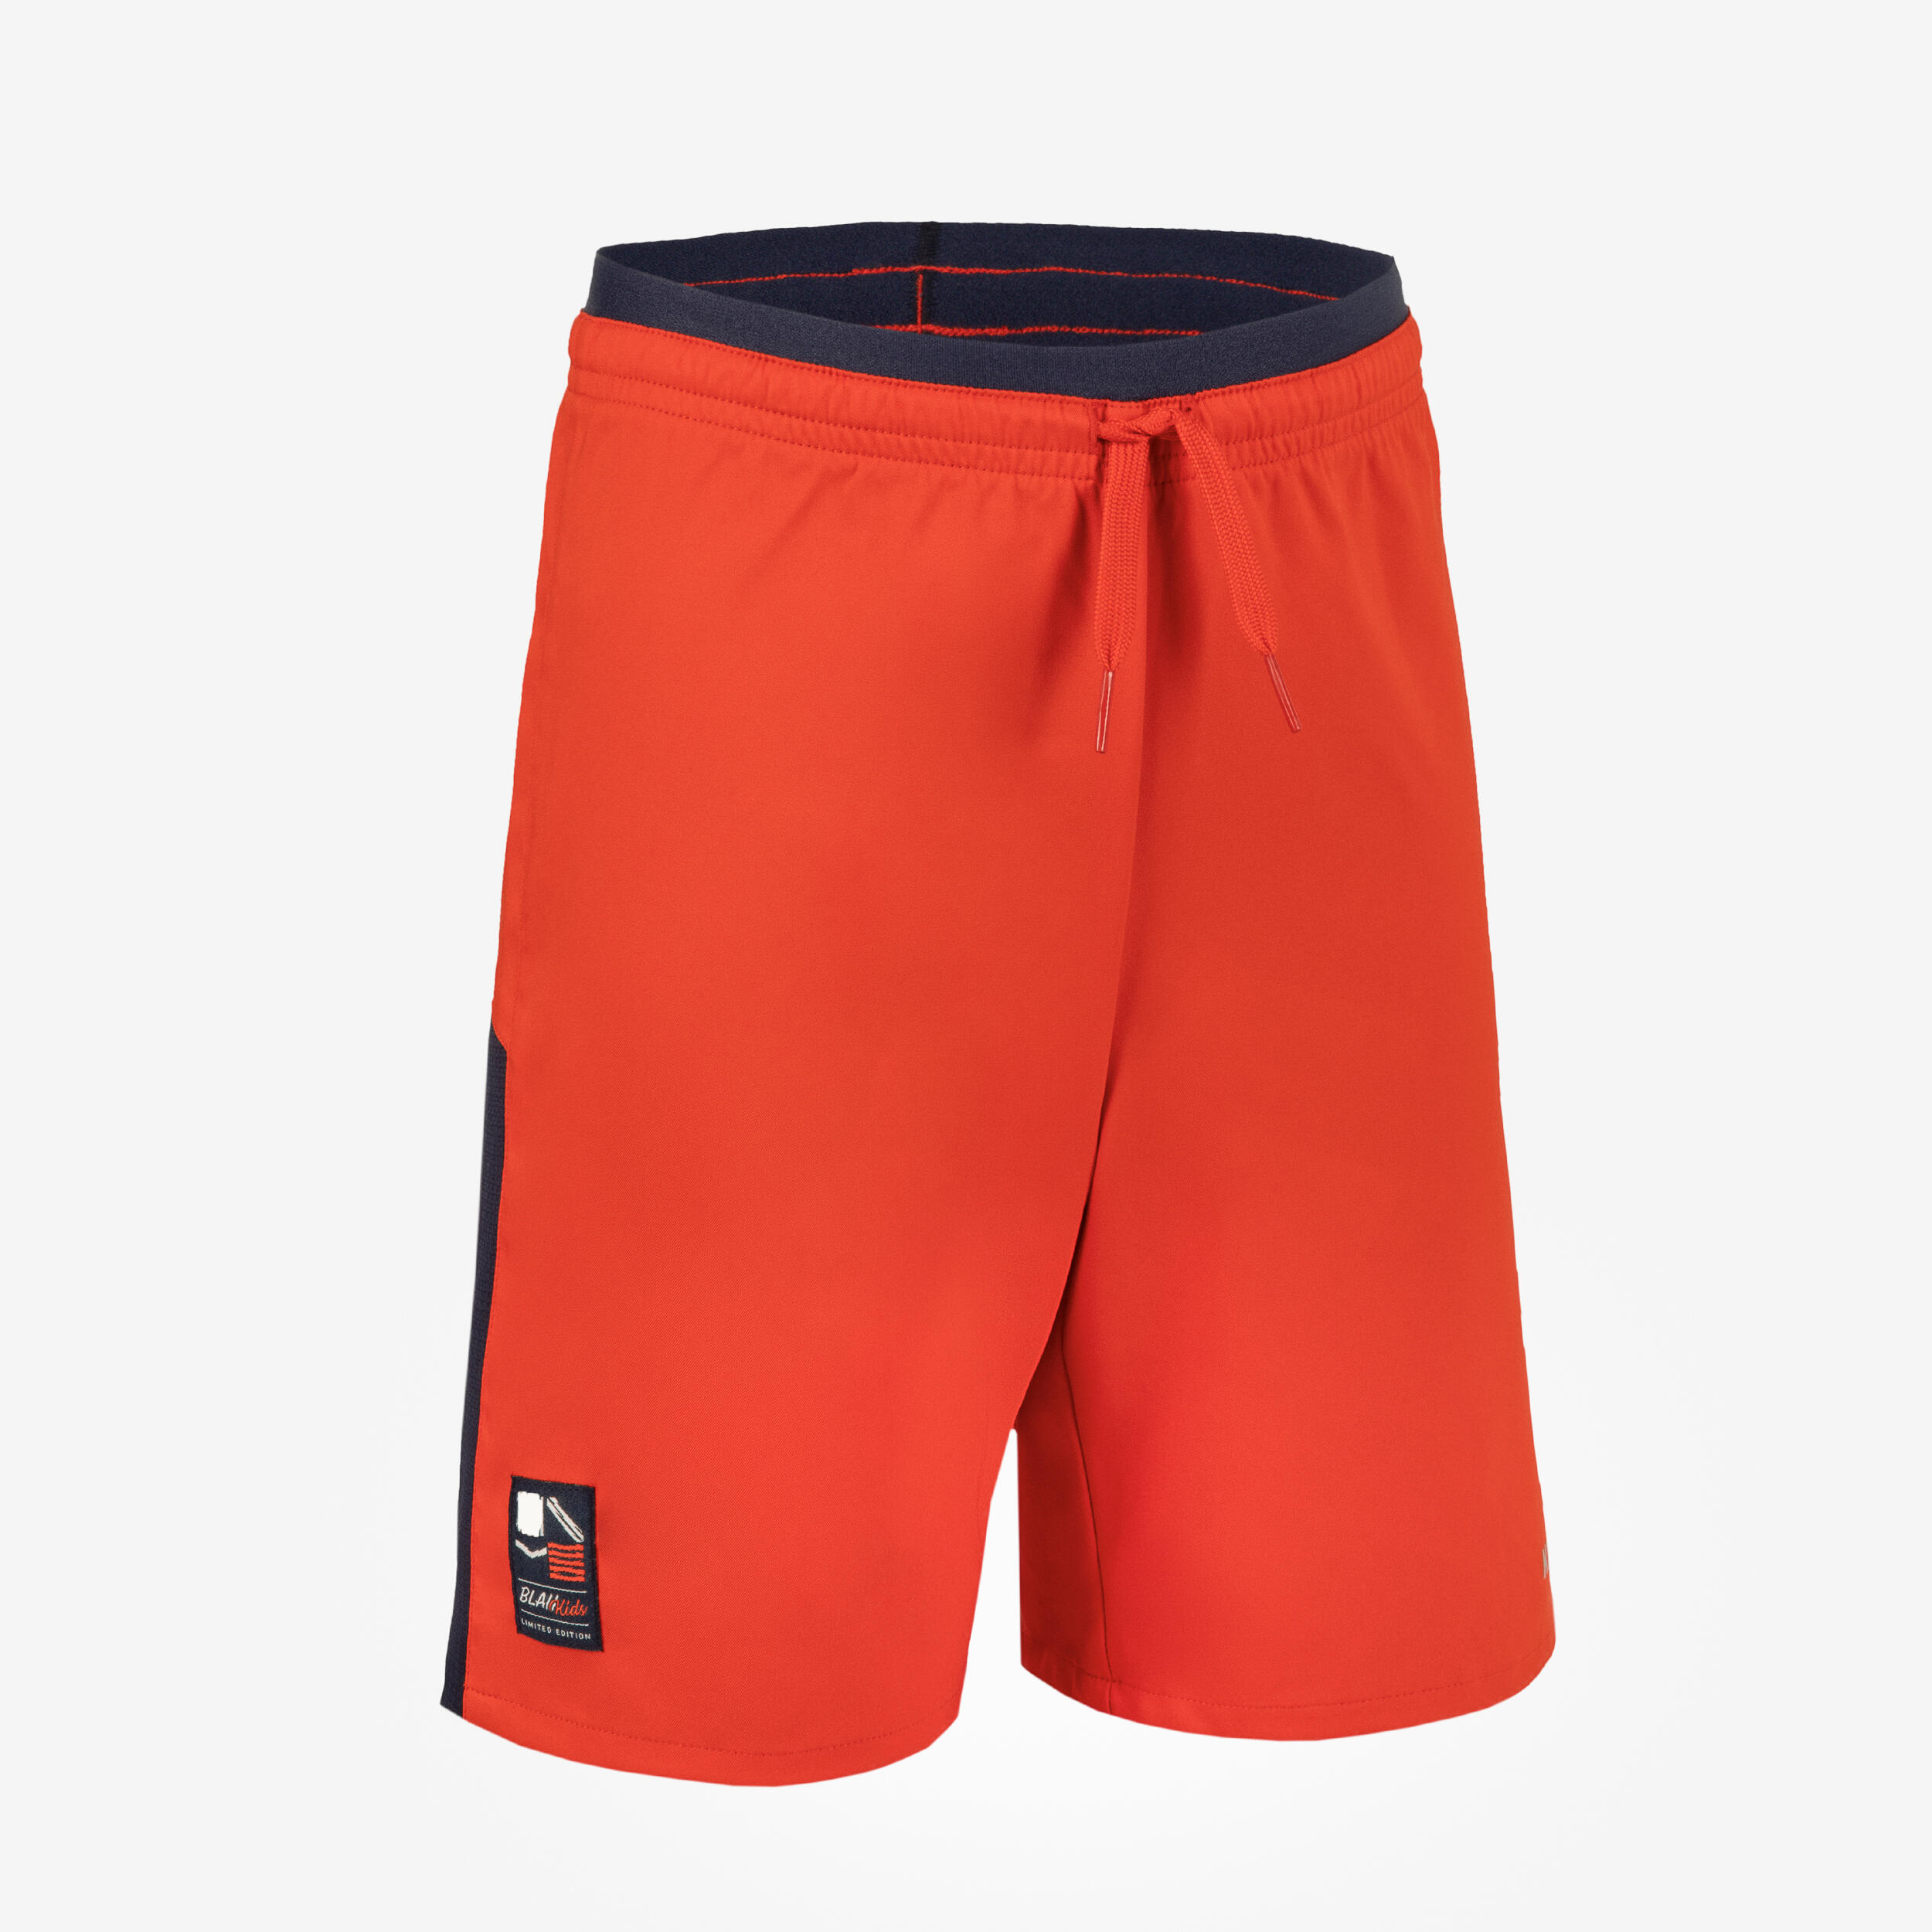 KIPSTA Kids' Football Shorts - Red/Navy